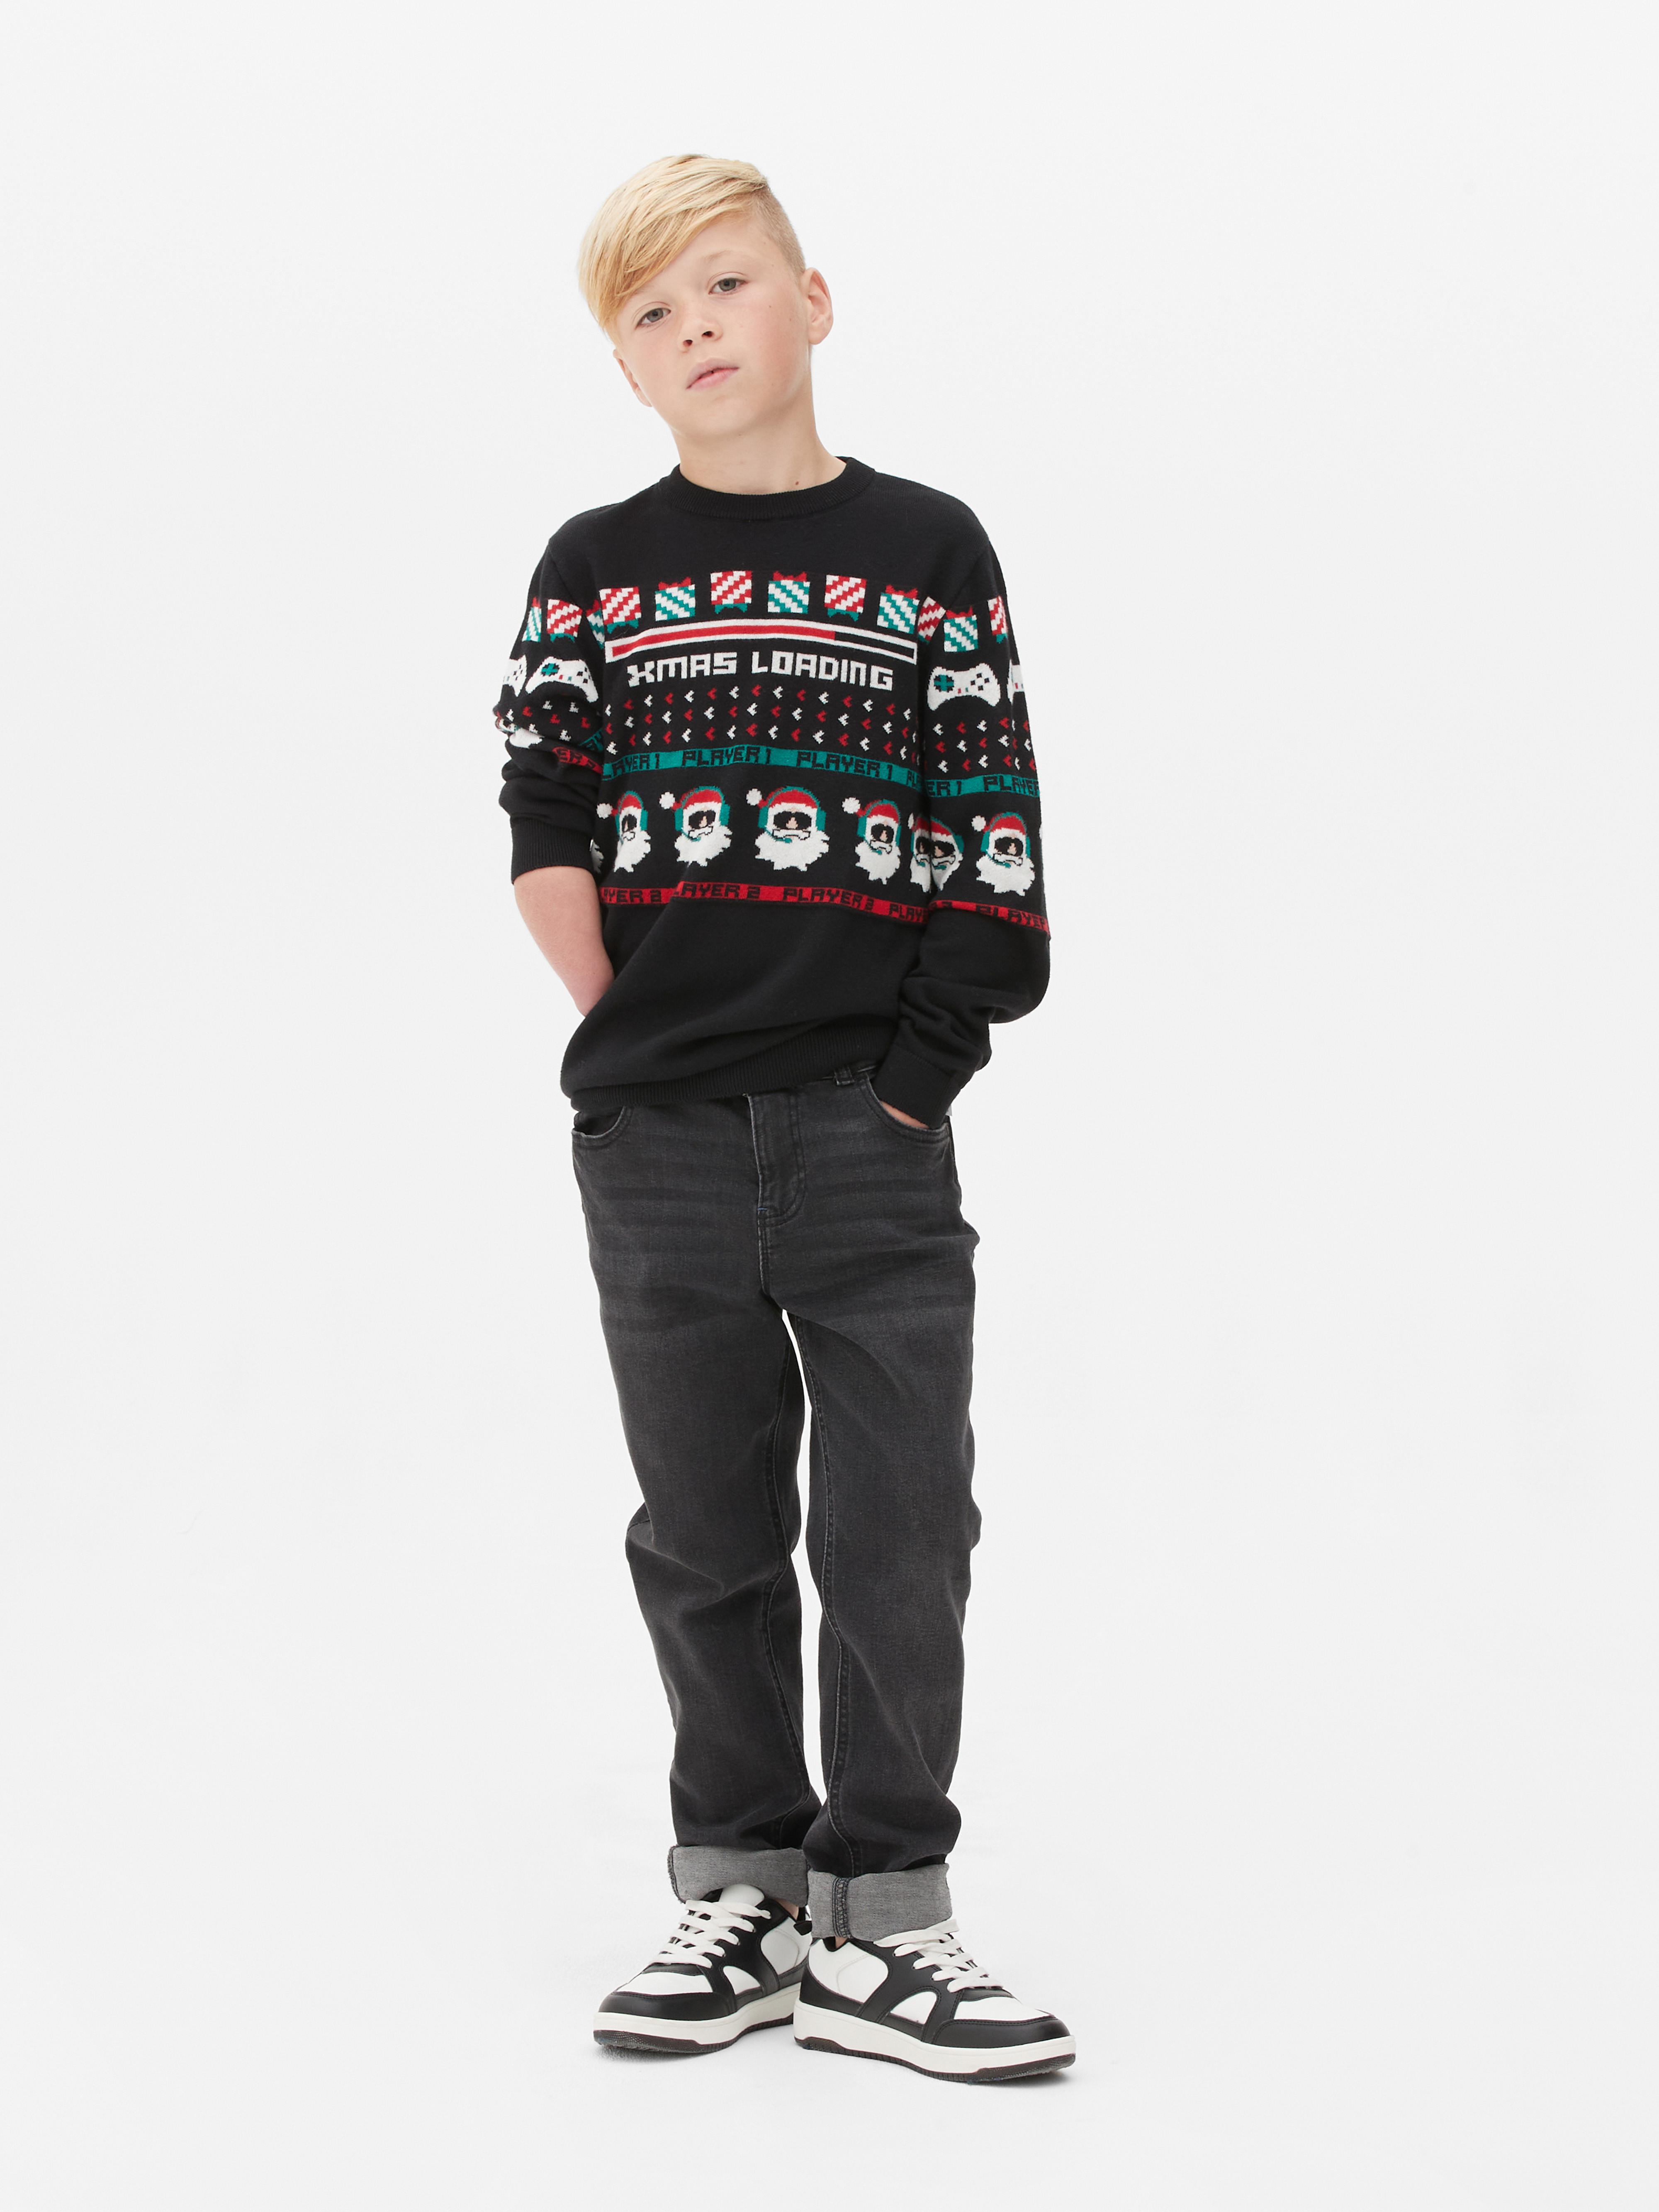 Kids' Gaming Christmas Sweater